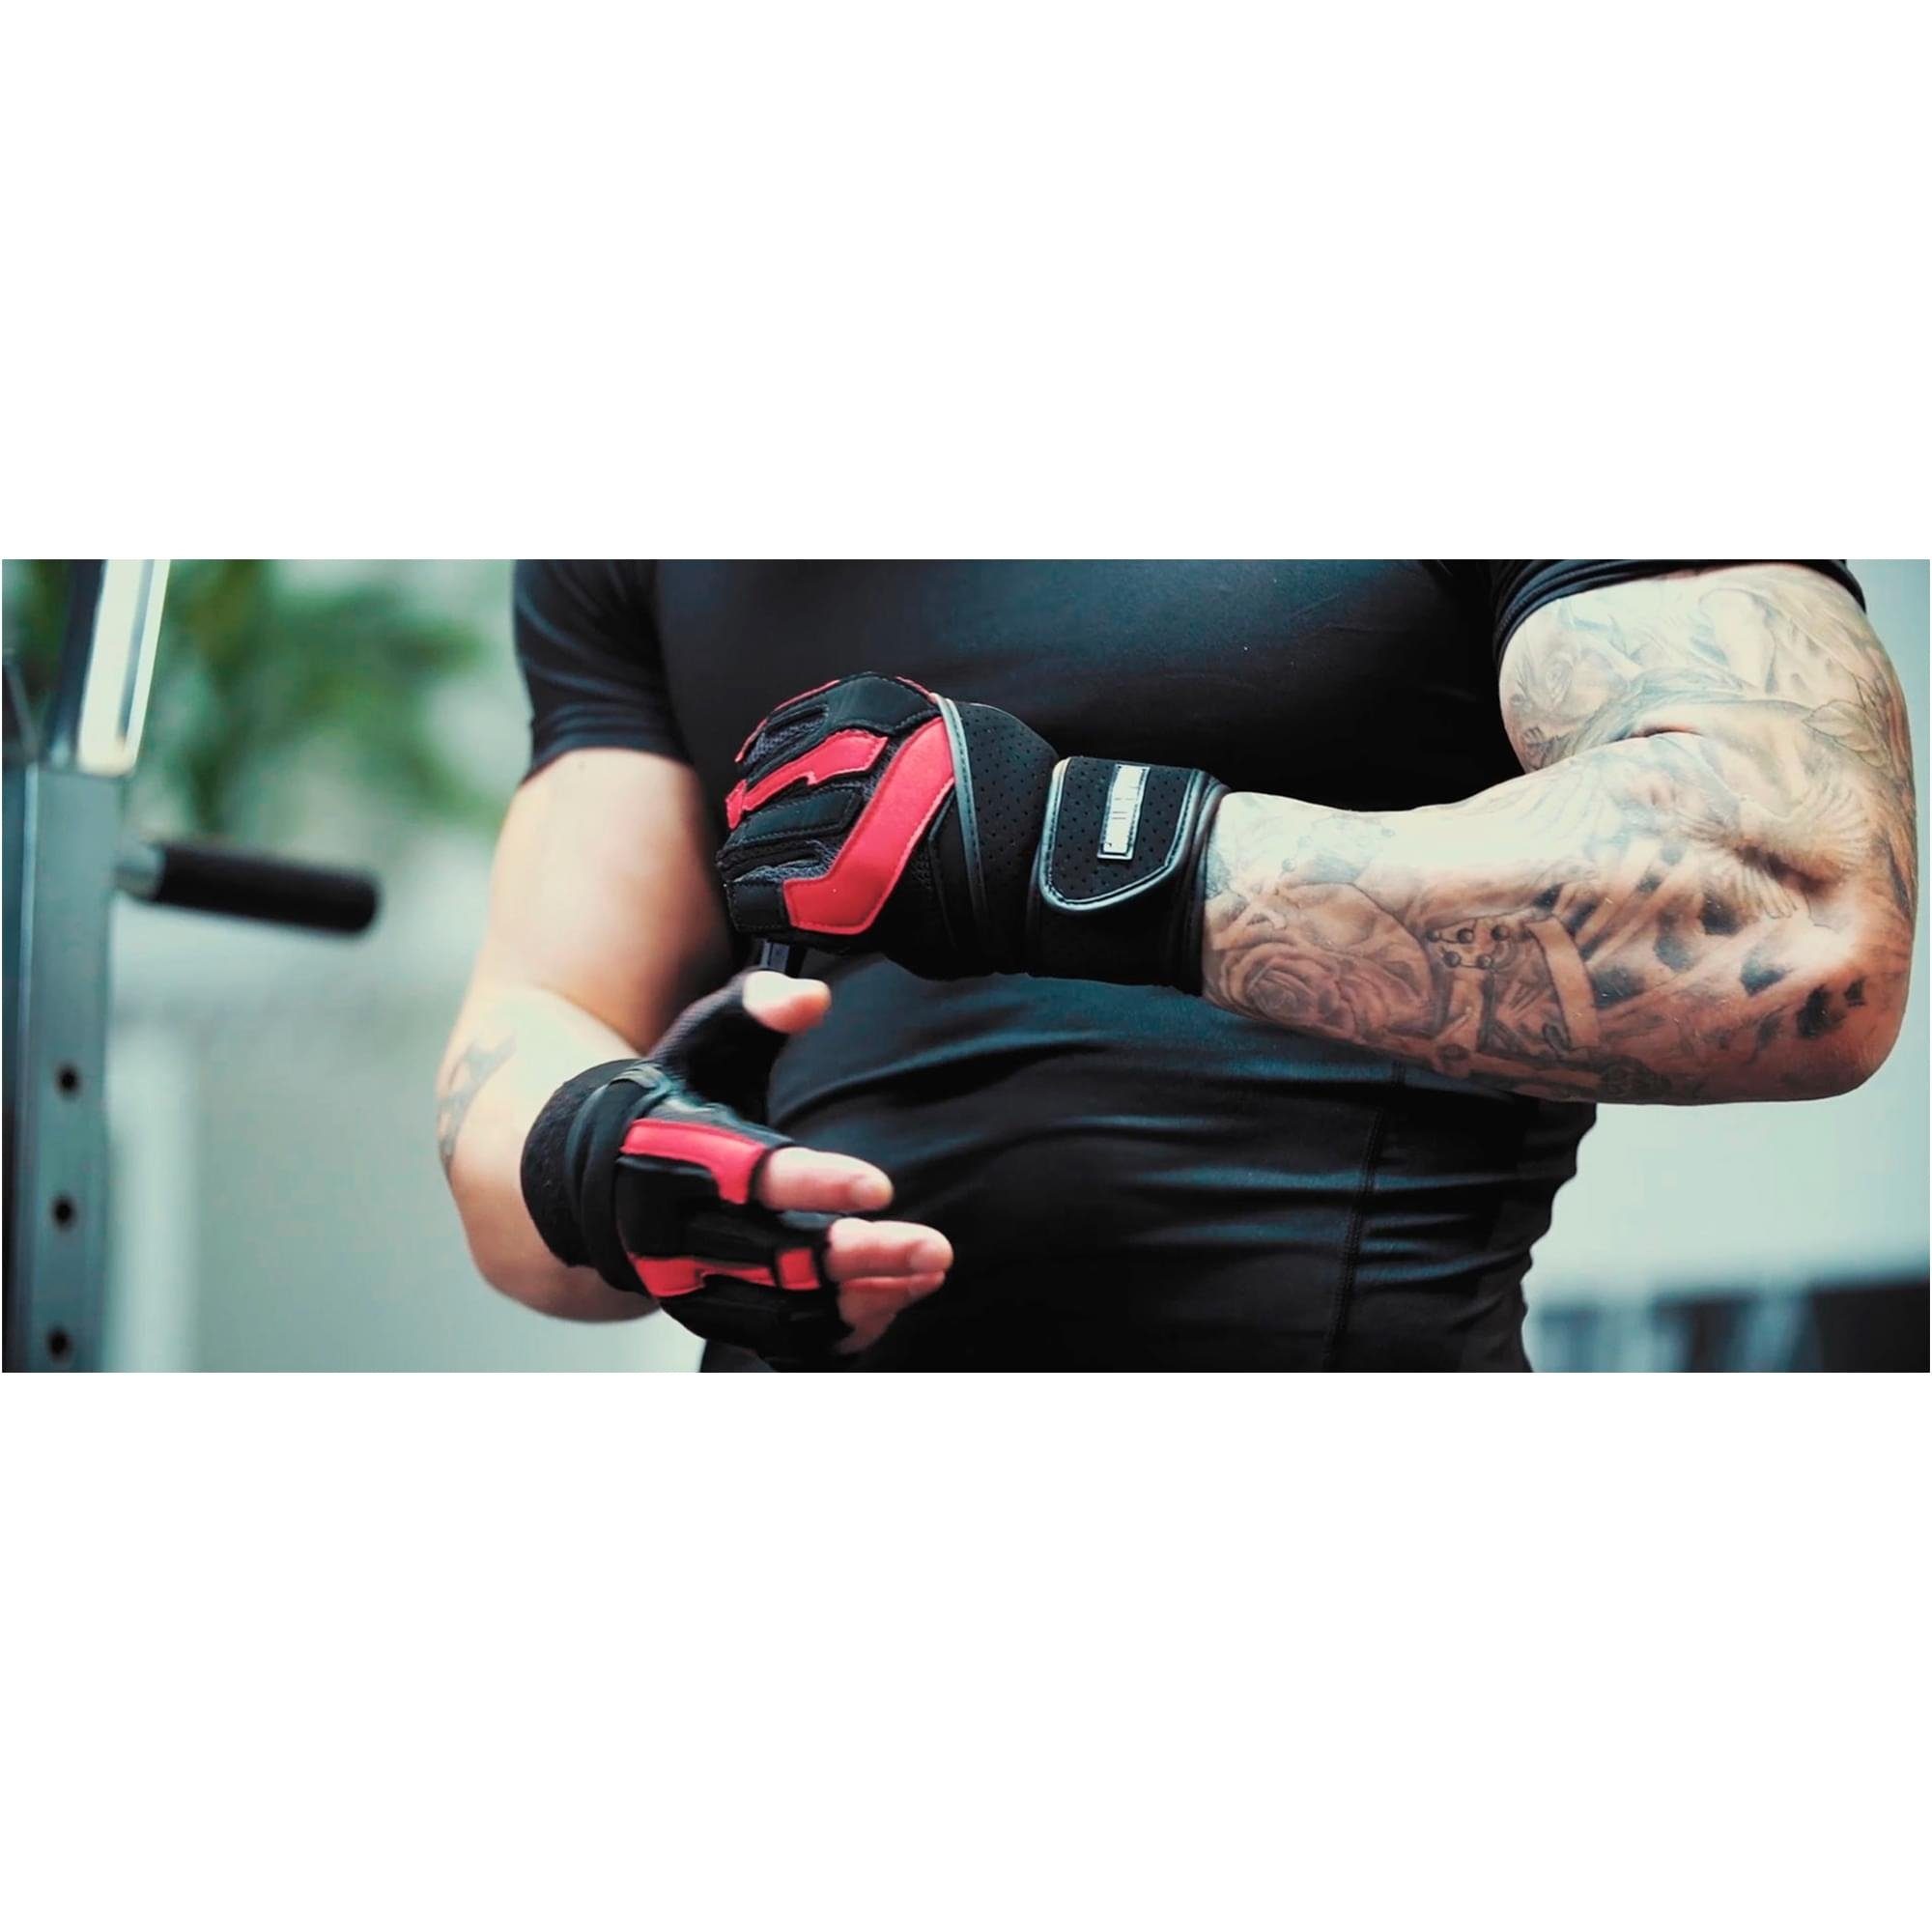 Trainingshandschuhe mit GORILLA Leder, Handschuhe - Fitness SPORTS Sporthandschuhe Handgelenkstütze,